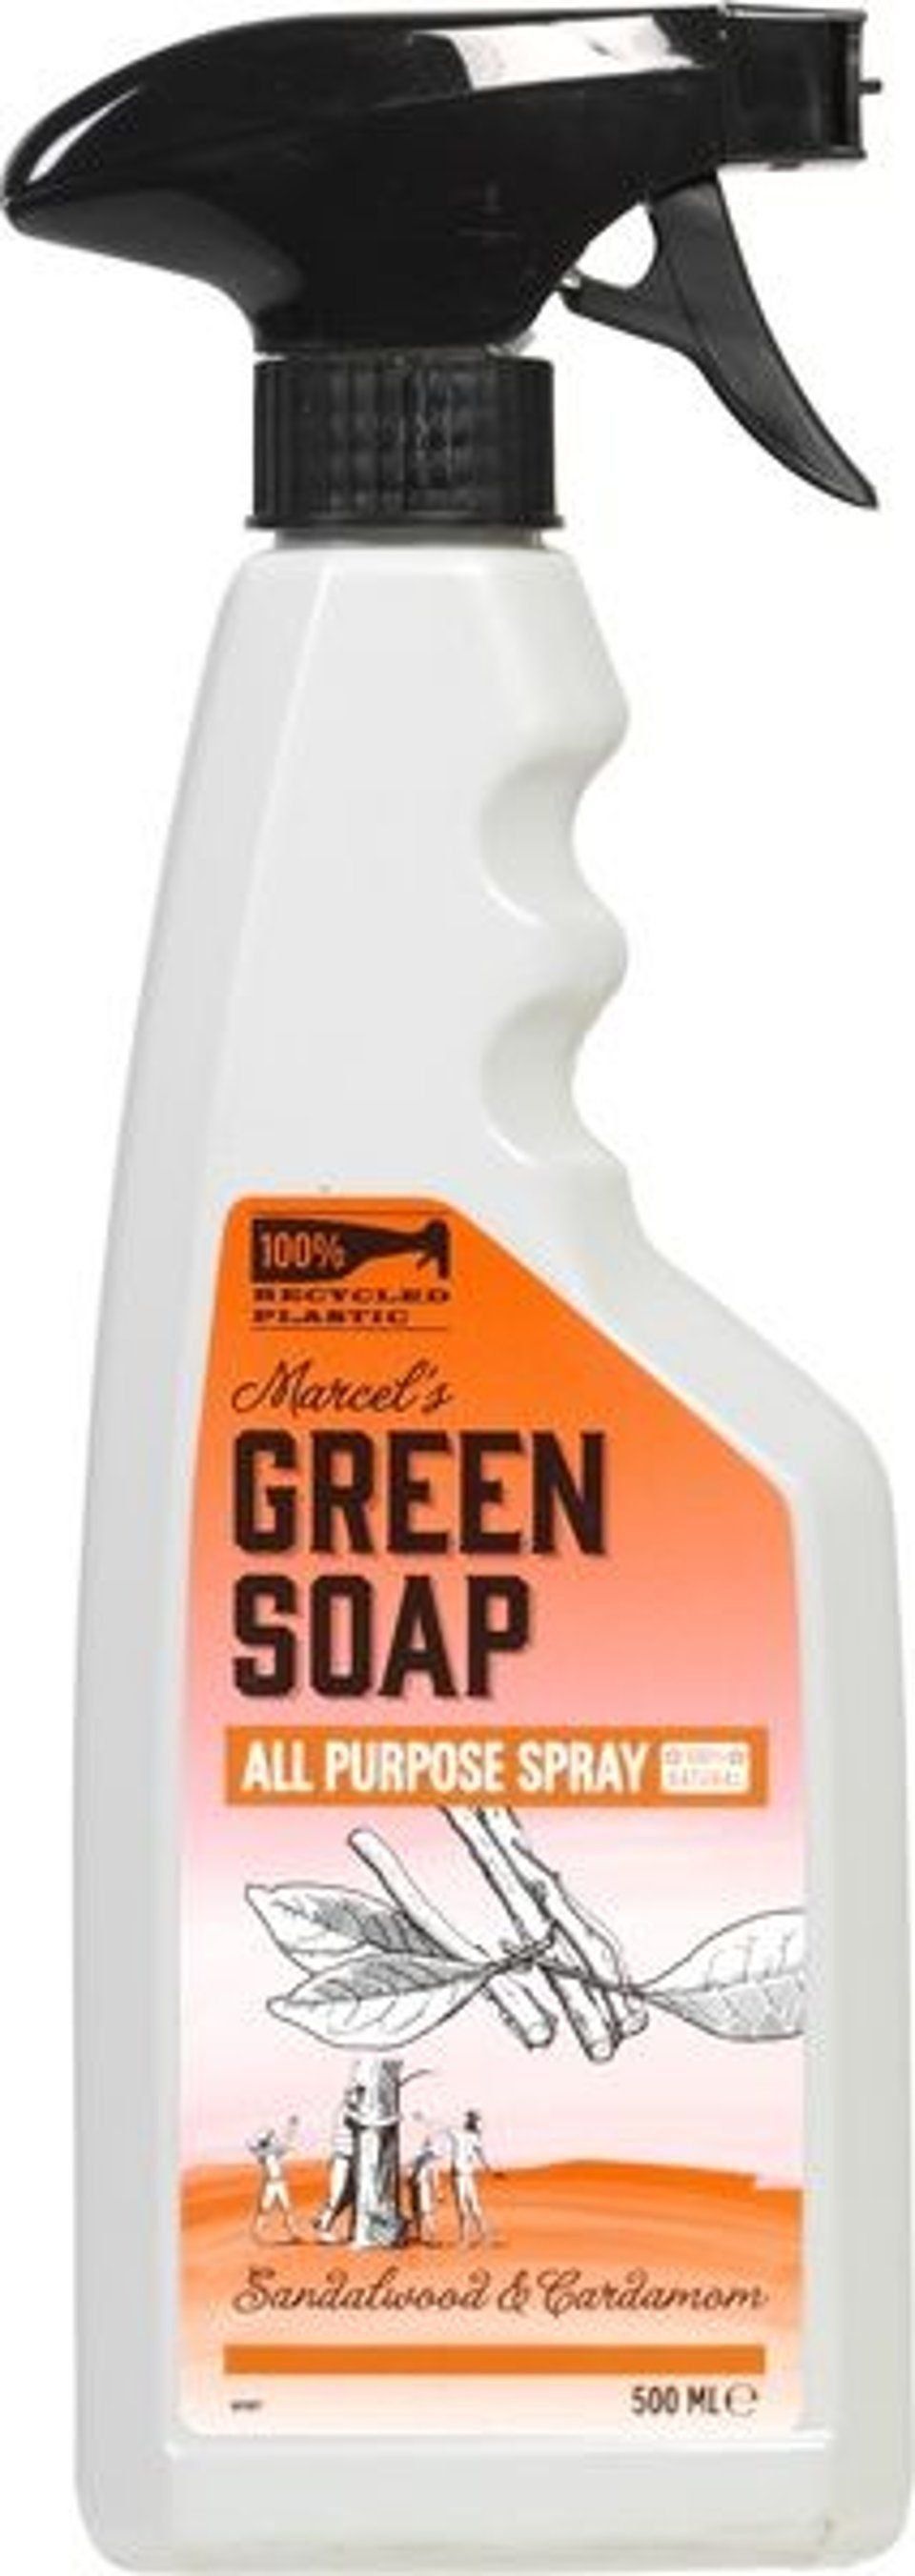 MARCEL'S GREEN SOAP Allesrein. Spray Sandelwood & Cardemom